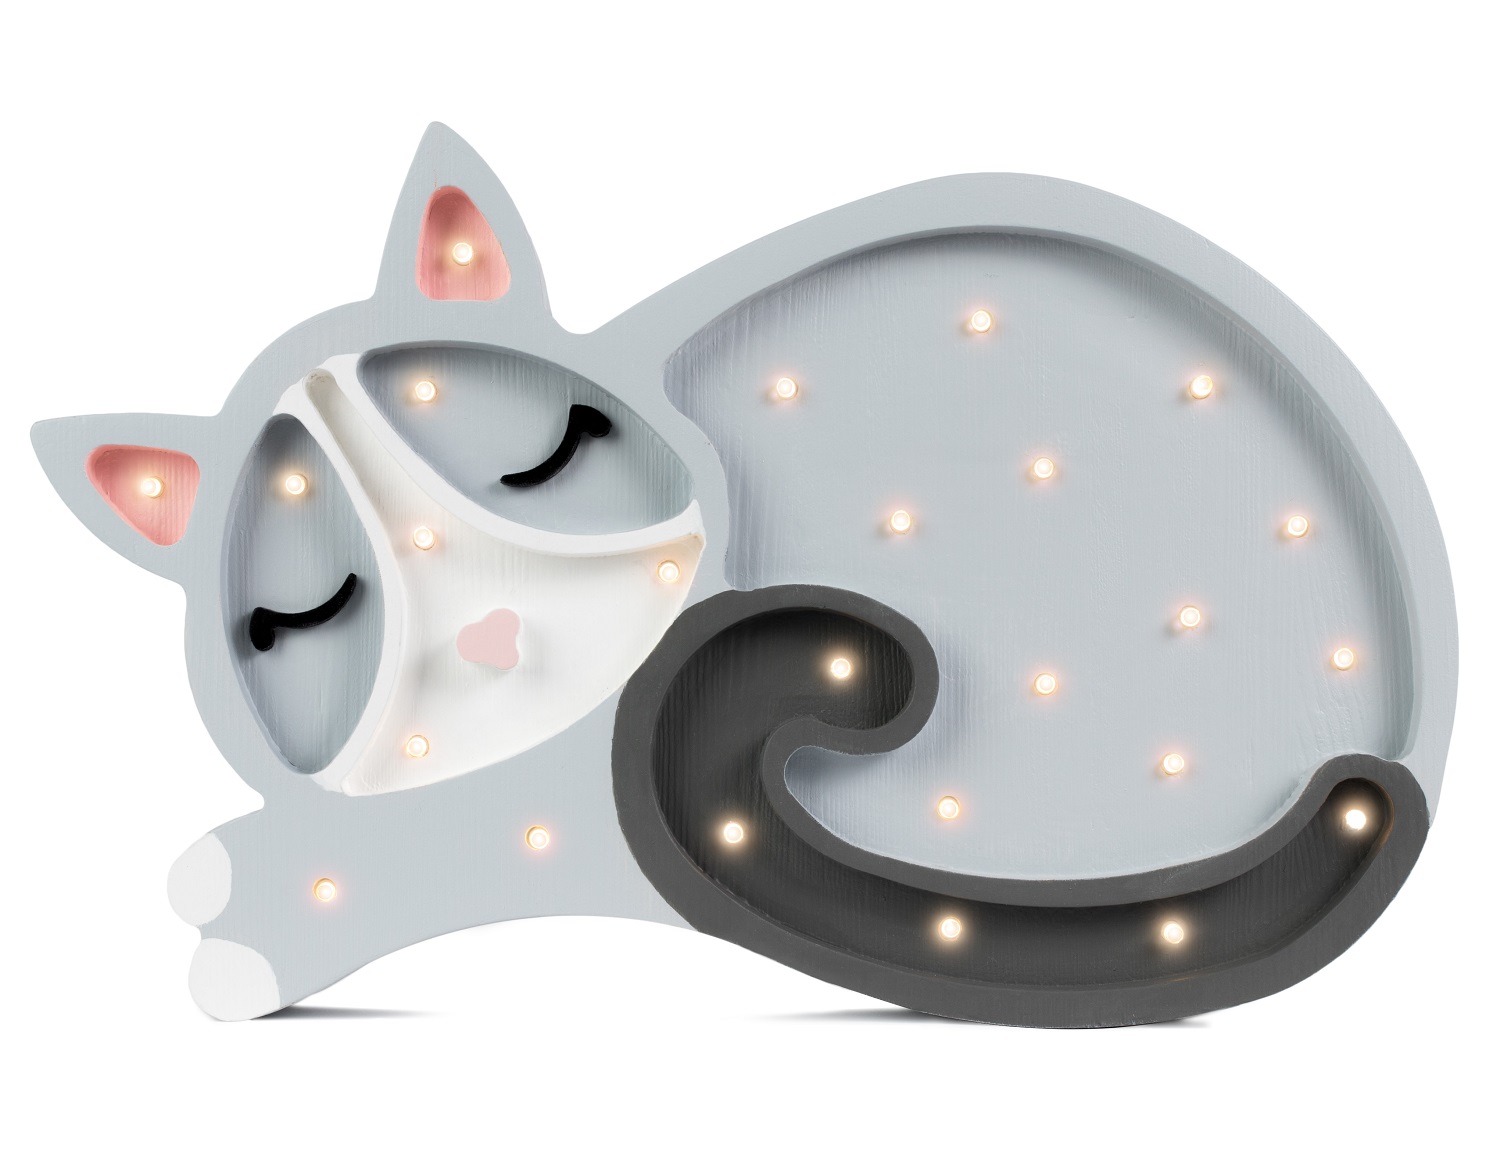 Lampe veilleuse chat gris